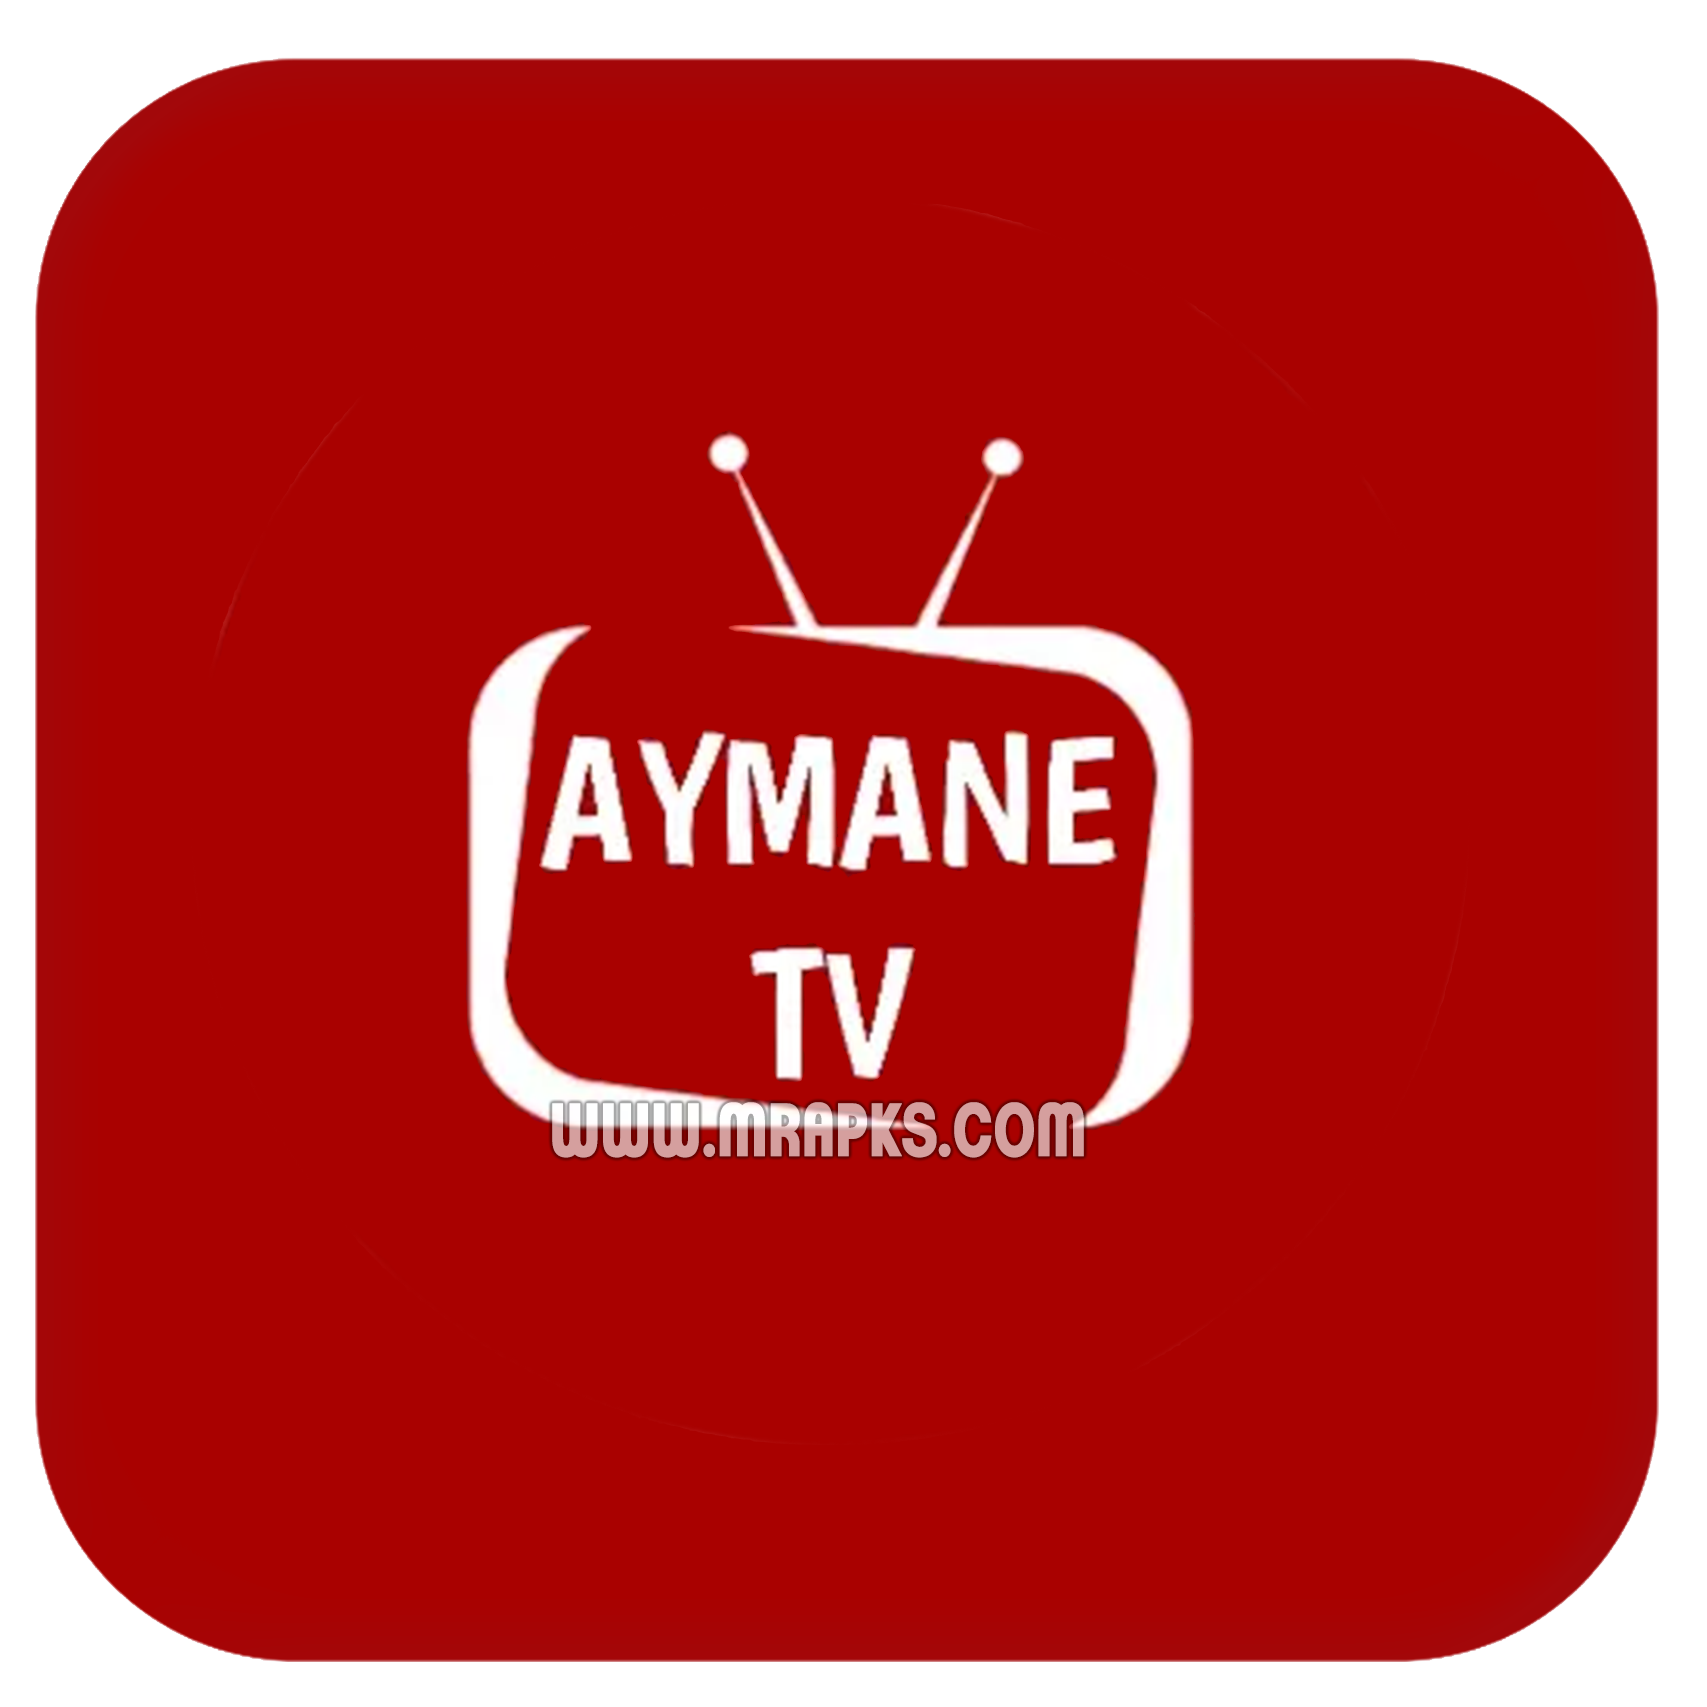 AYMAN TV (Live TV App)